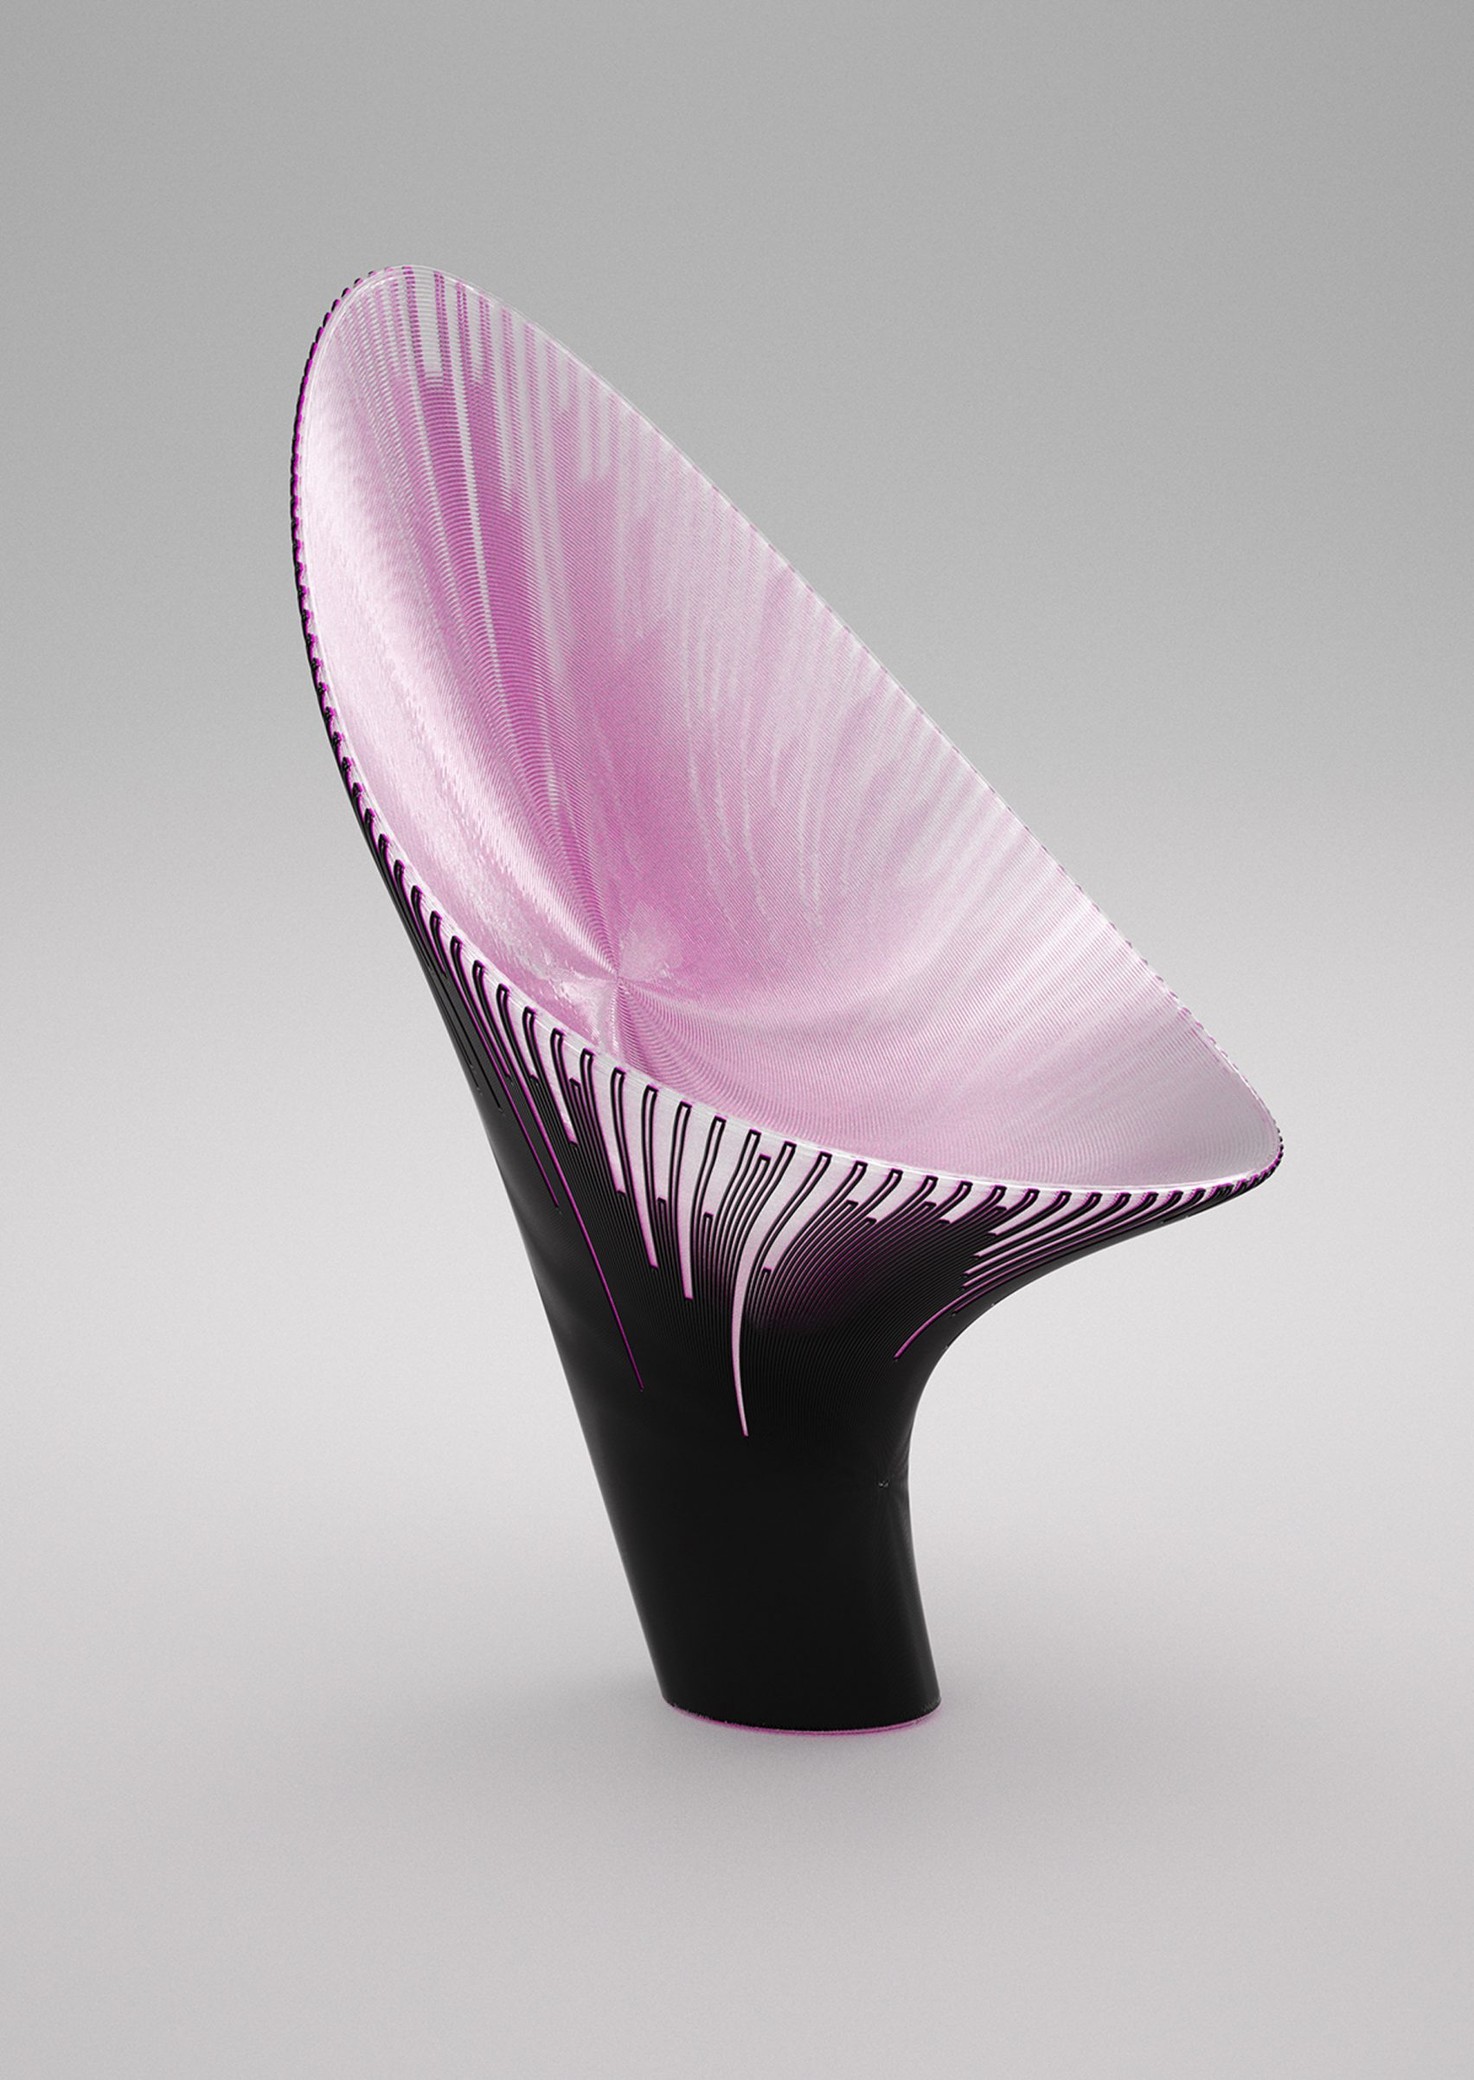 3D-Printed+Chairs-Zaha+Hadid-Visual+Atelier+8-4.jpg